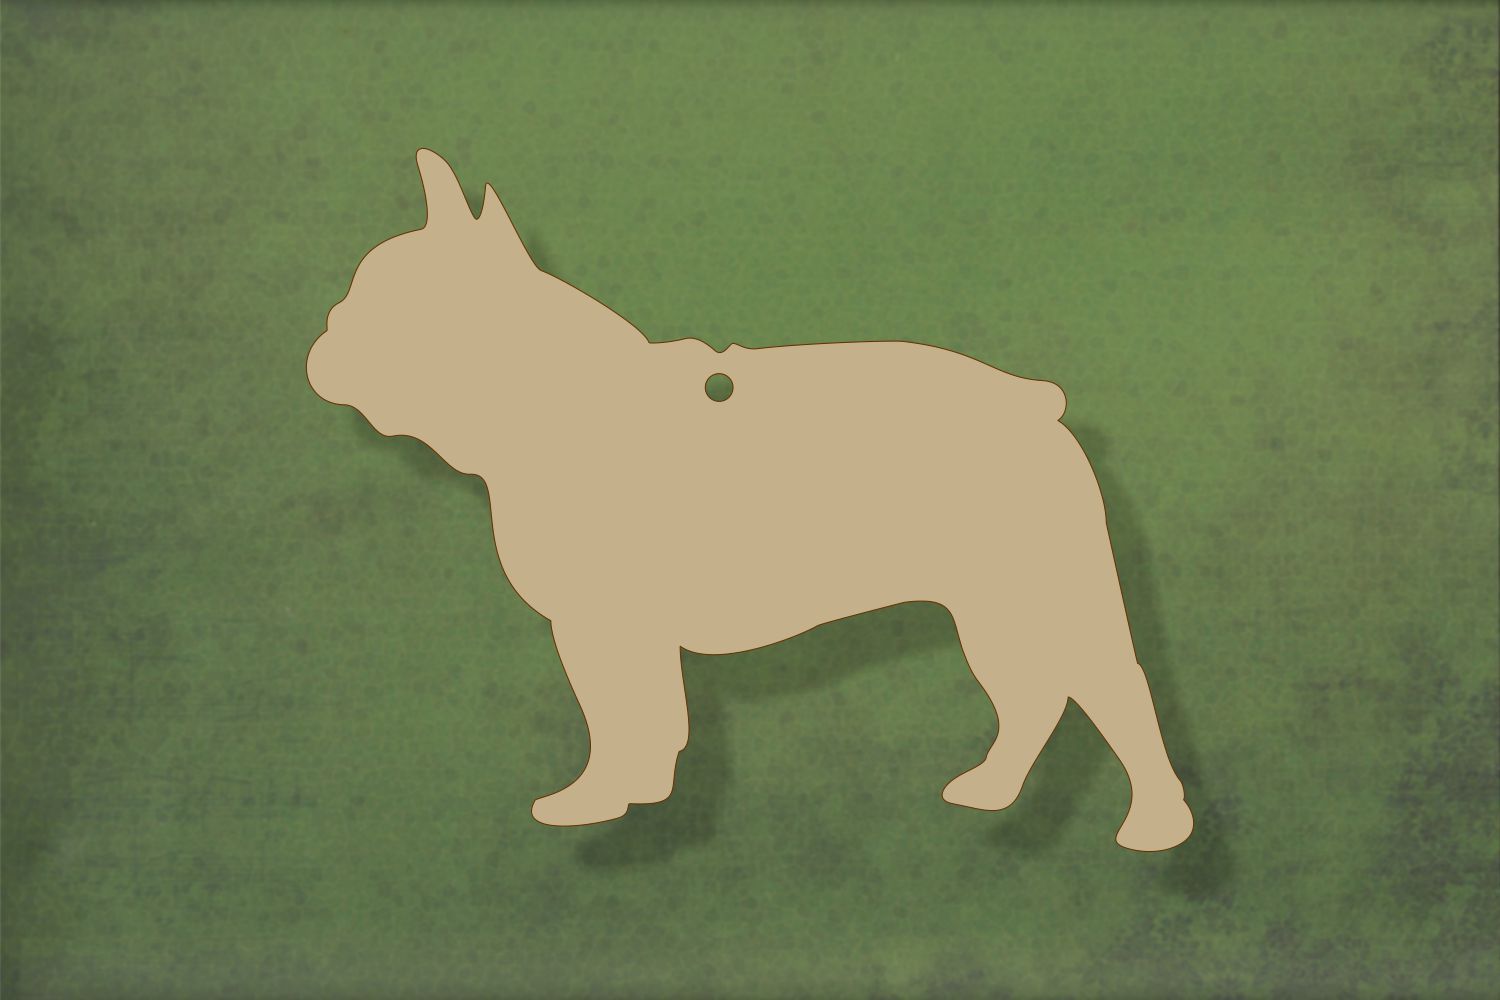 Laser cut, blank wooden French bulldog shape for craft